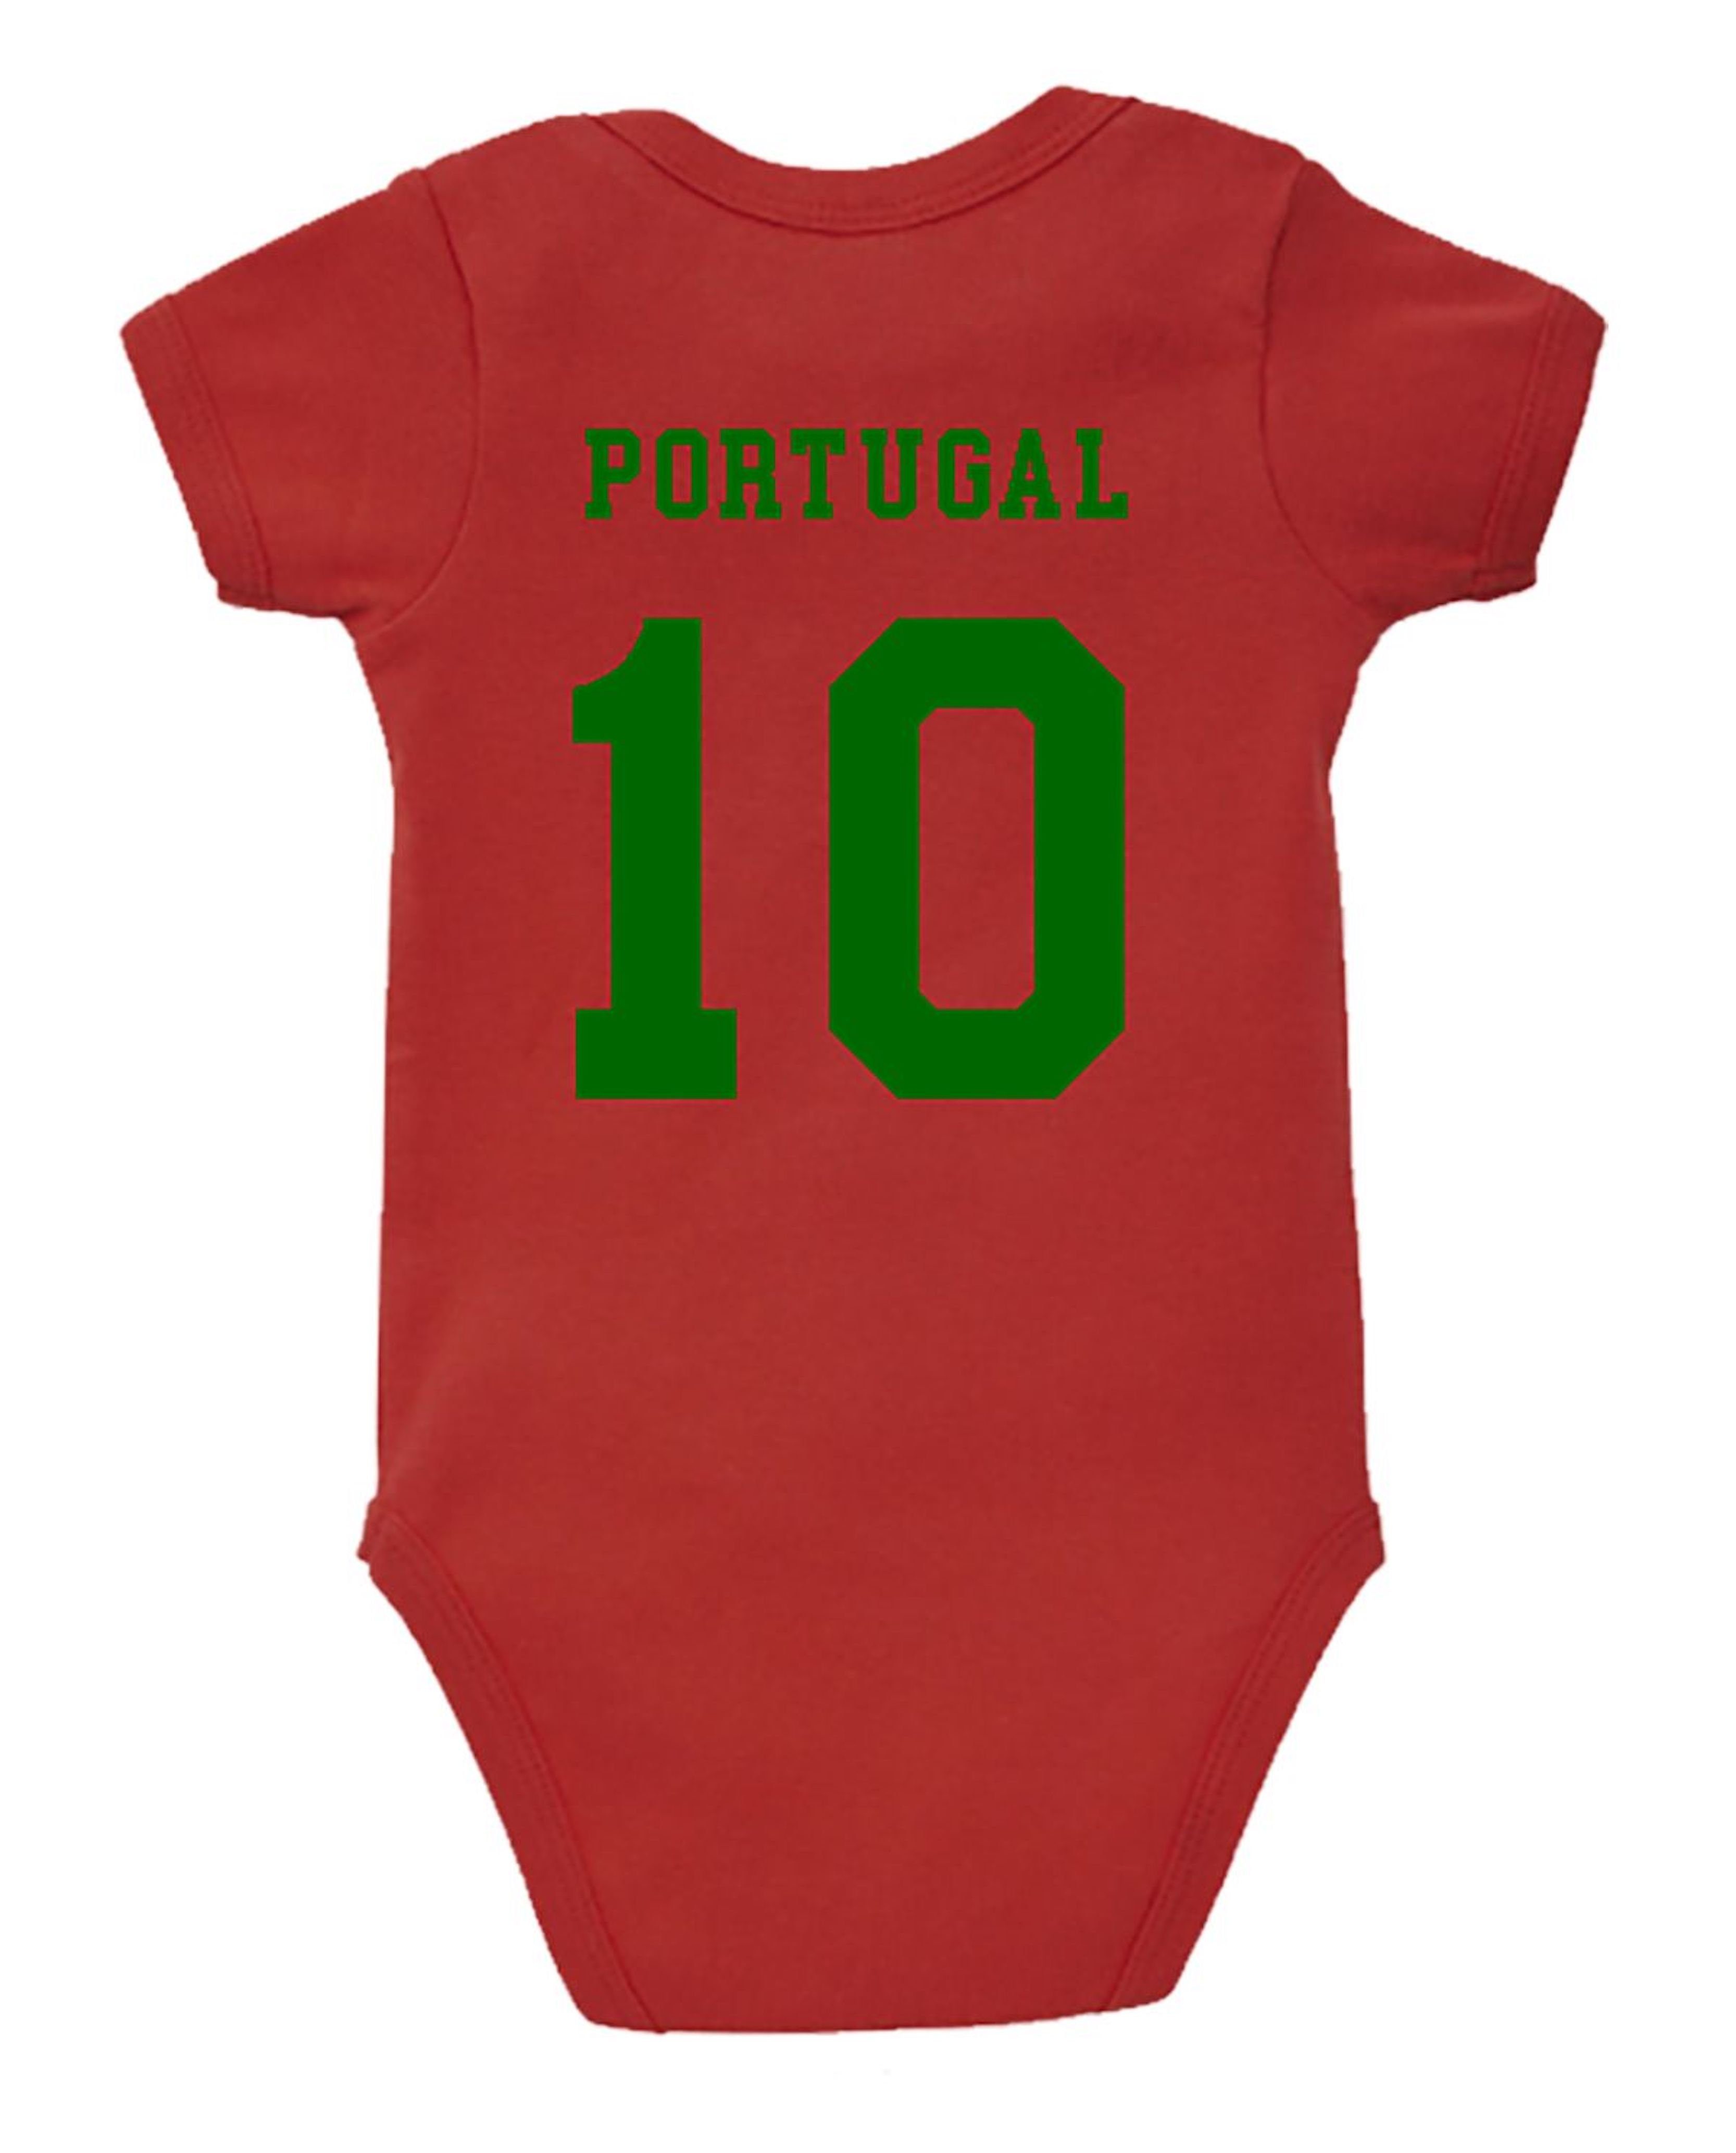 Kurzarmbody Motiv Youth Strampler trendigem Portugal Kinder mit Body Designz Baby